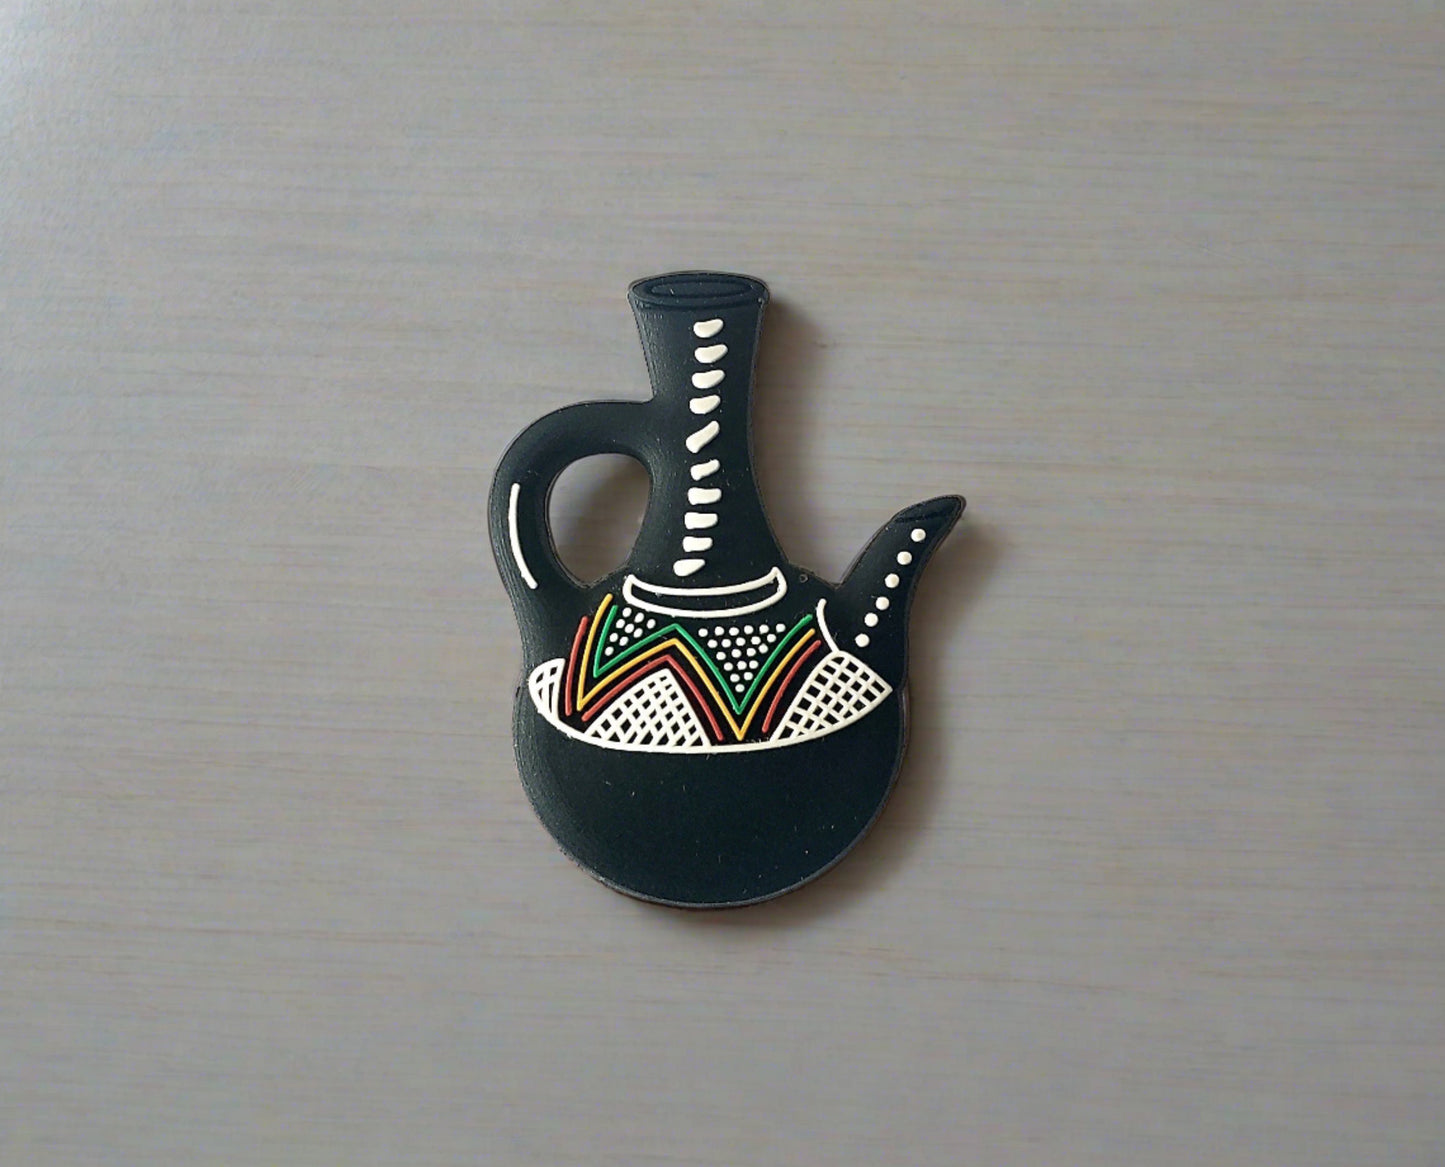 Ethiopian Coffee Pot (Jebena - ጀበና) Fridge Magnet Souvenir Gift